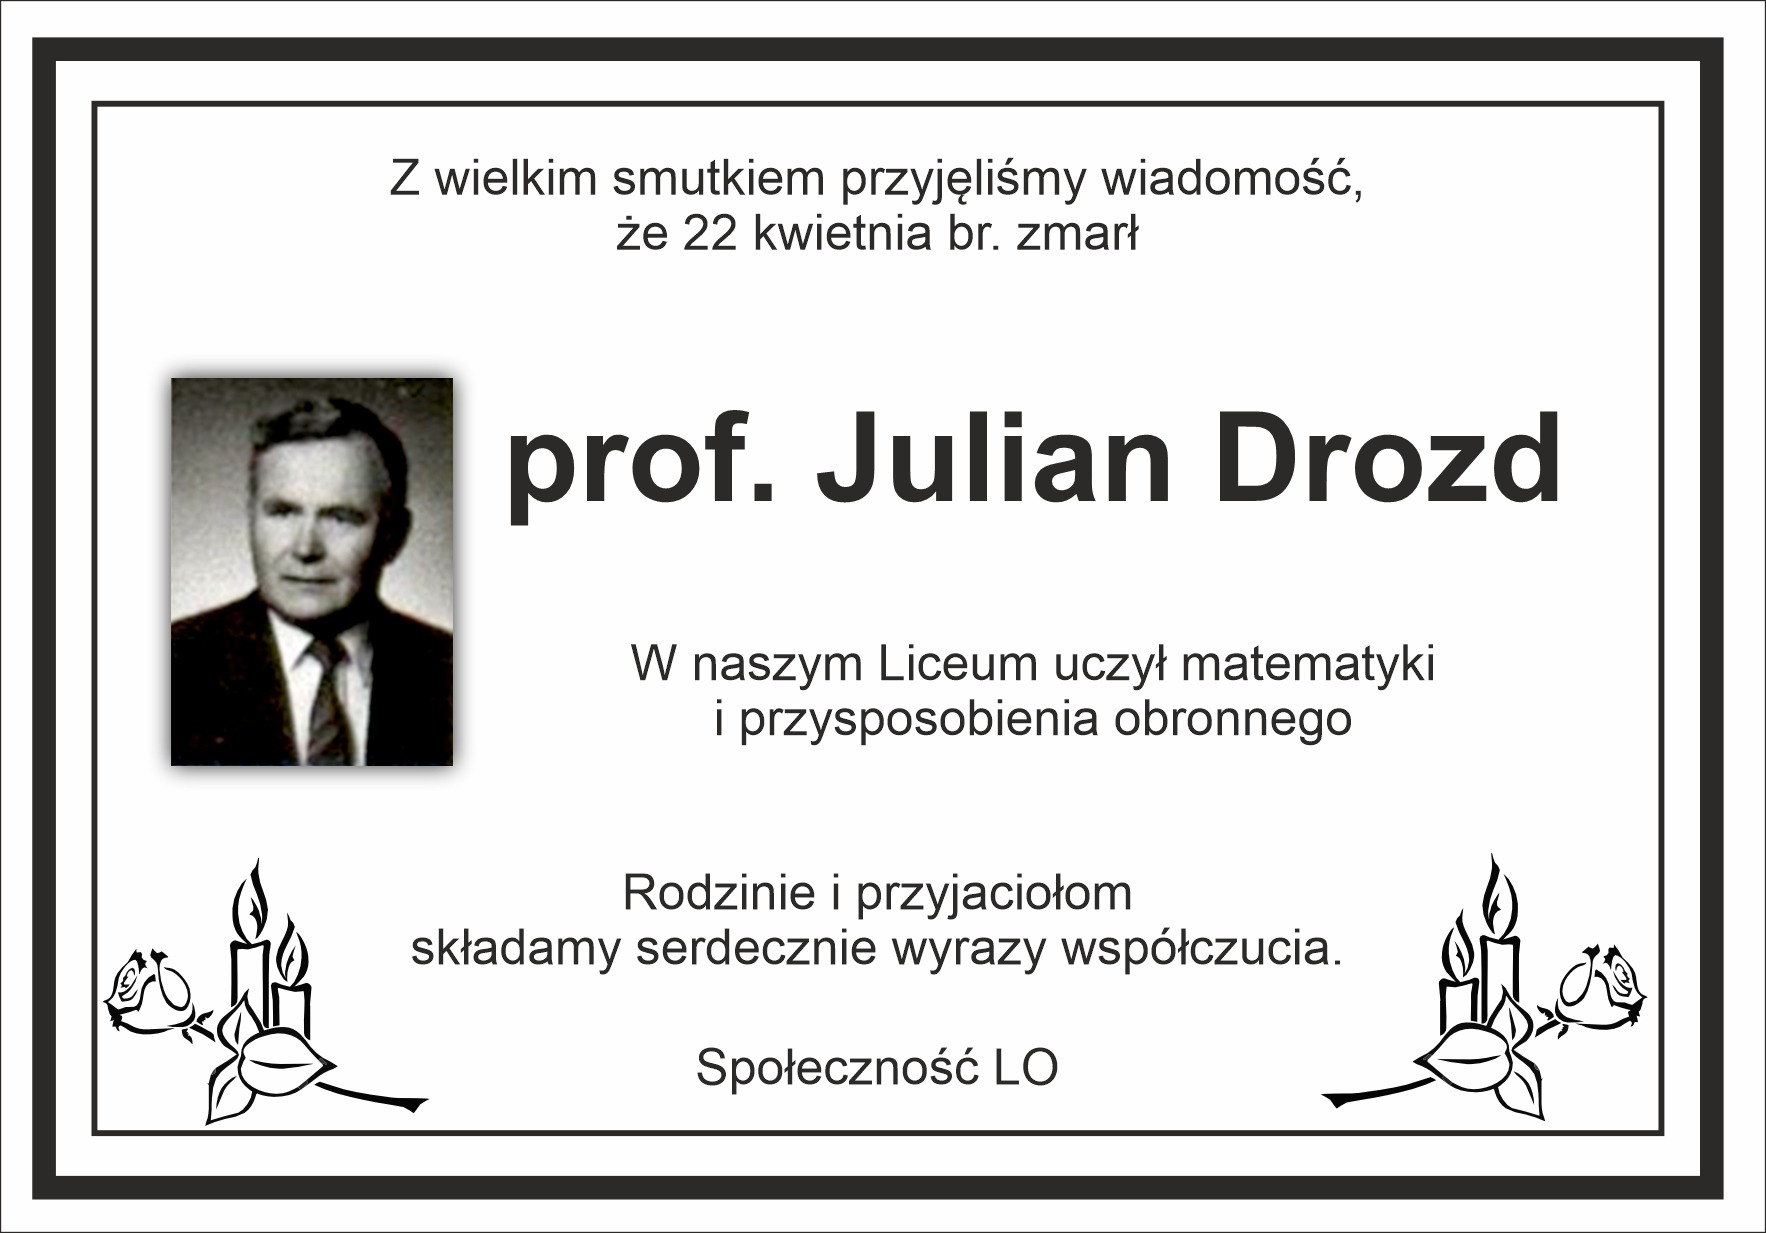 Zmarł prof. Julian Drozd - Obrazek 1